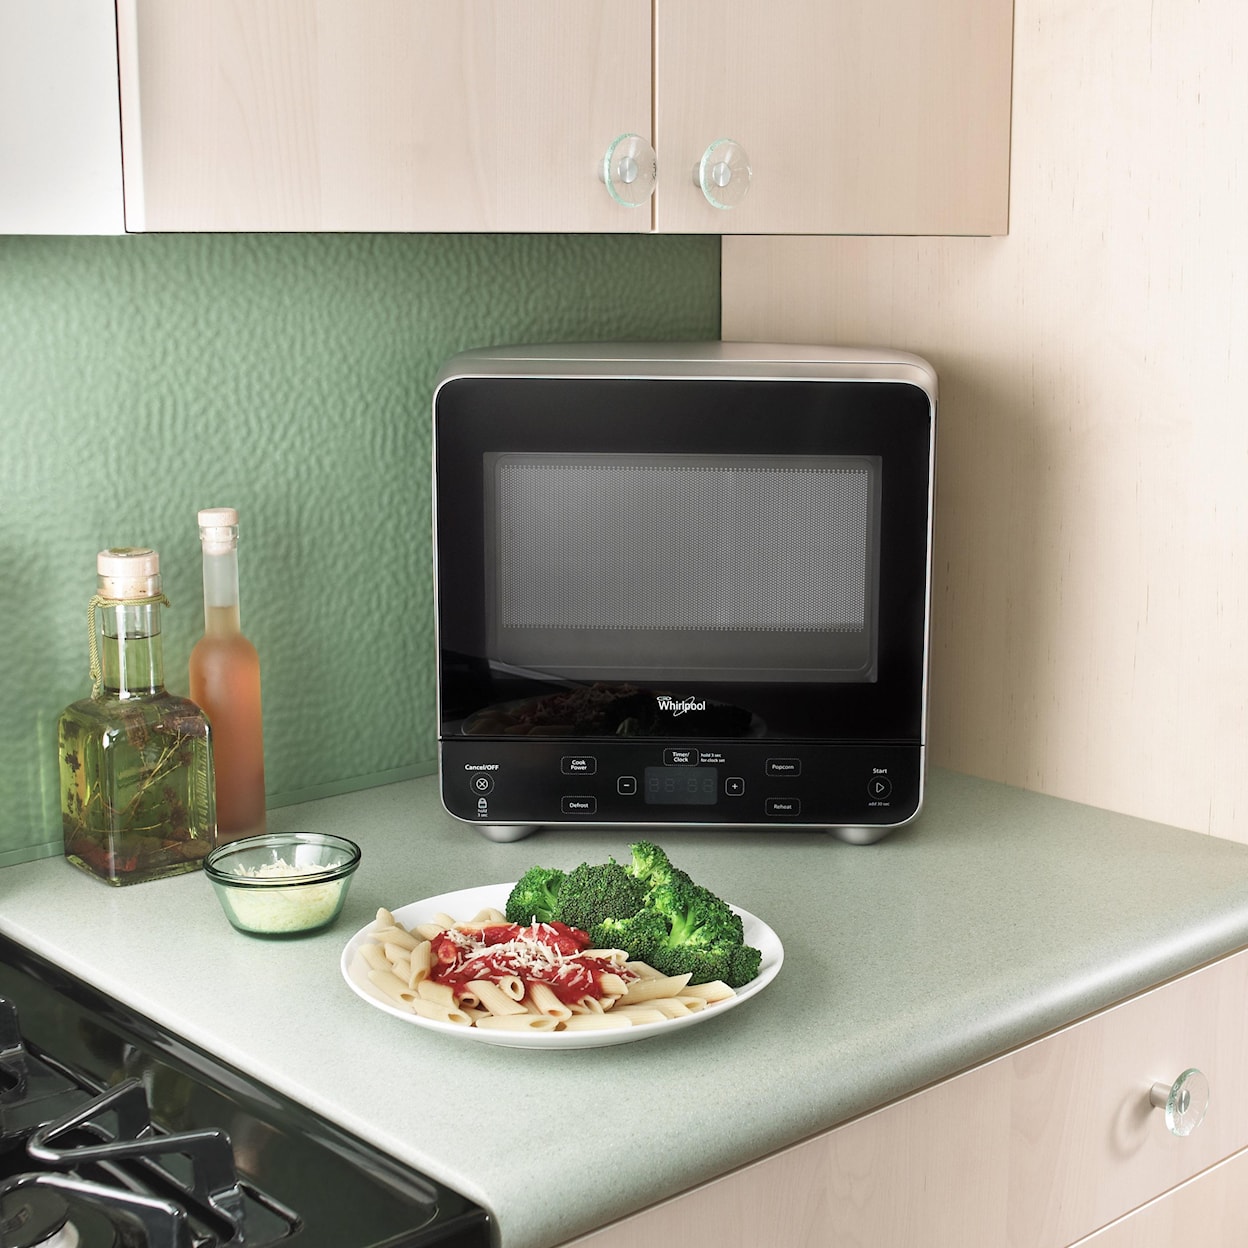 Whirlpool Microwaves - Whirlpool 0.5 cu. ft. Countertop Microwave Oven